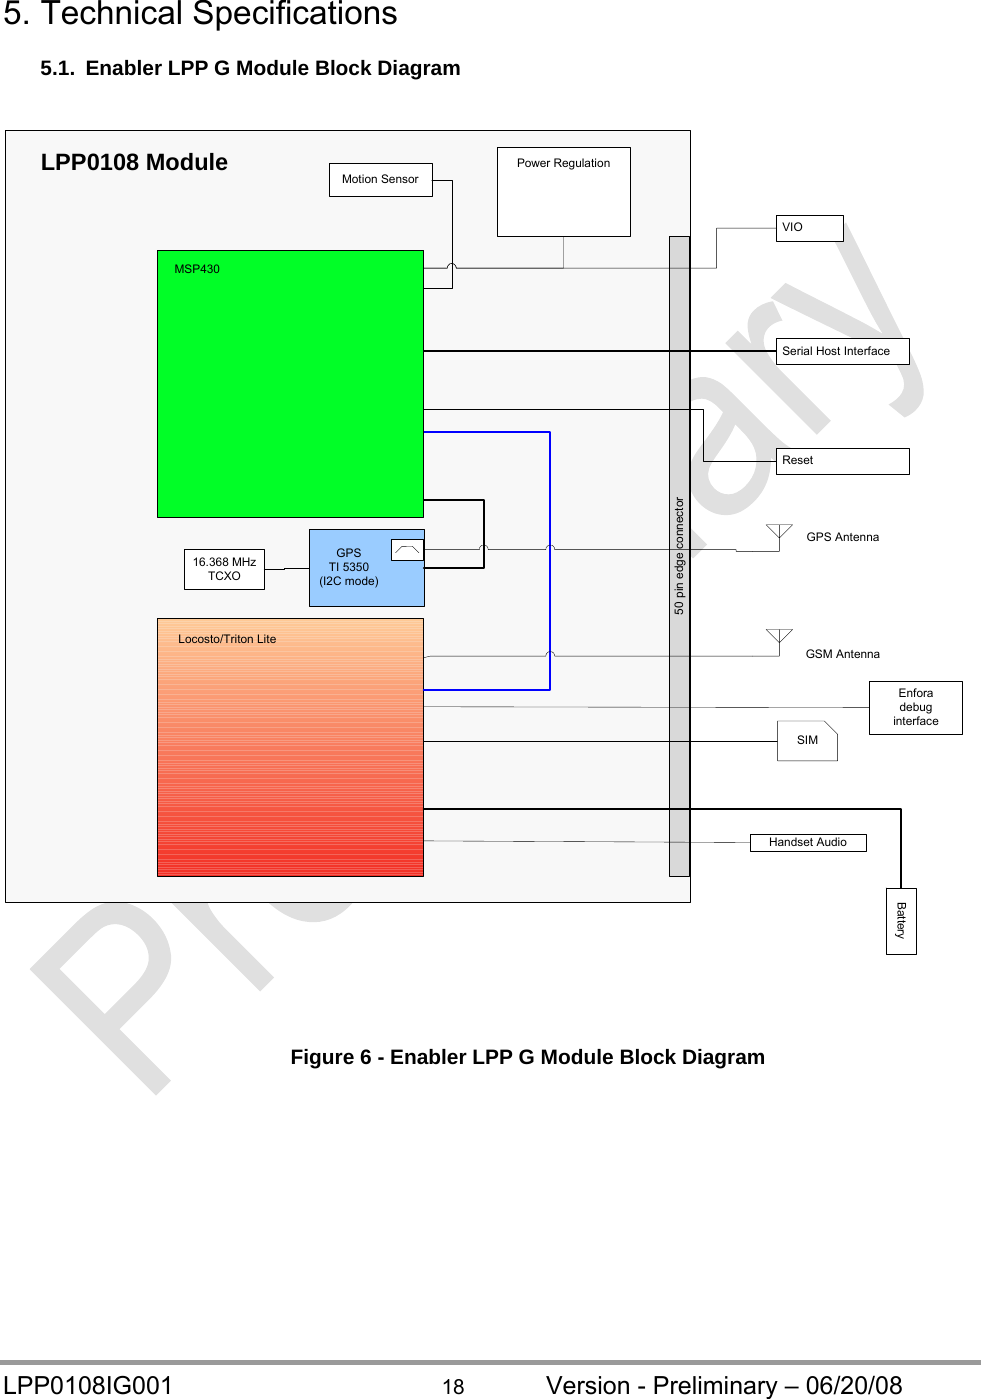  LPP0108IG001  18  Version - Preliminary – 06/20/08 5. Technical Specifications  5.1.  Enabler LPP G Module Block Diagram   50 pin edge connectorLPP0108 ModuleLocosto/Triton LitePower RegulationMSP430GPSTI 5350(I2C mode)16.368 MHzTCXOSIMGSM AntennaGPS AntennaBatteryMotion SensorSerial Host InterfaceEnforadebuginterfaceVIOResetHandset Audio    Figure 6 - Enabler LPP G Module Block Diagram   